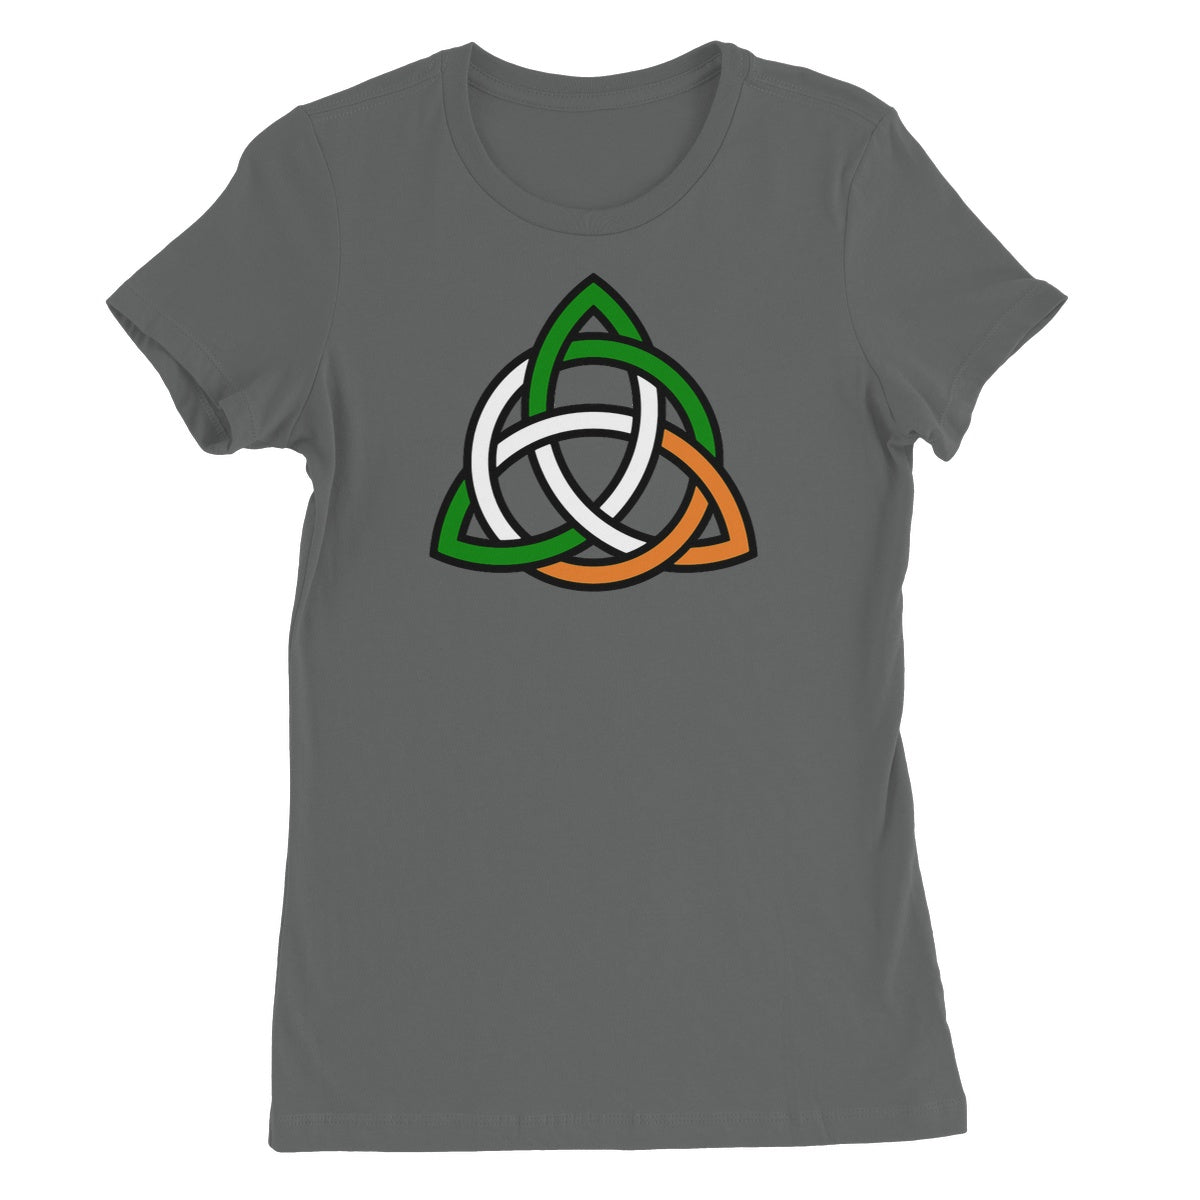 Irish Celtic Knot Women's T-Shirt